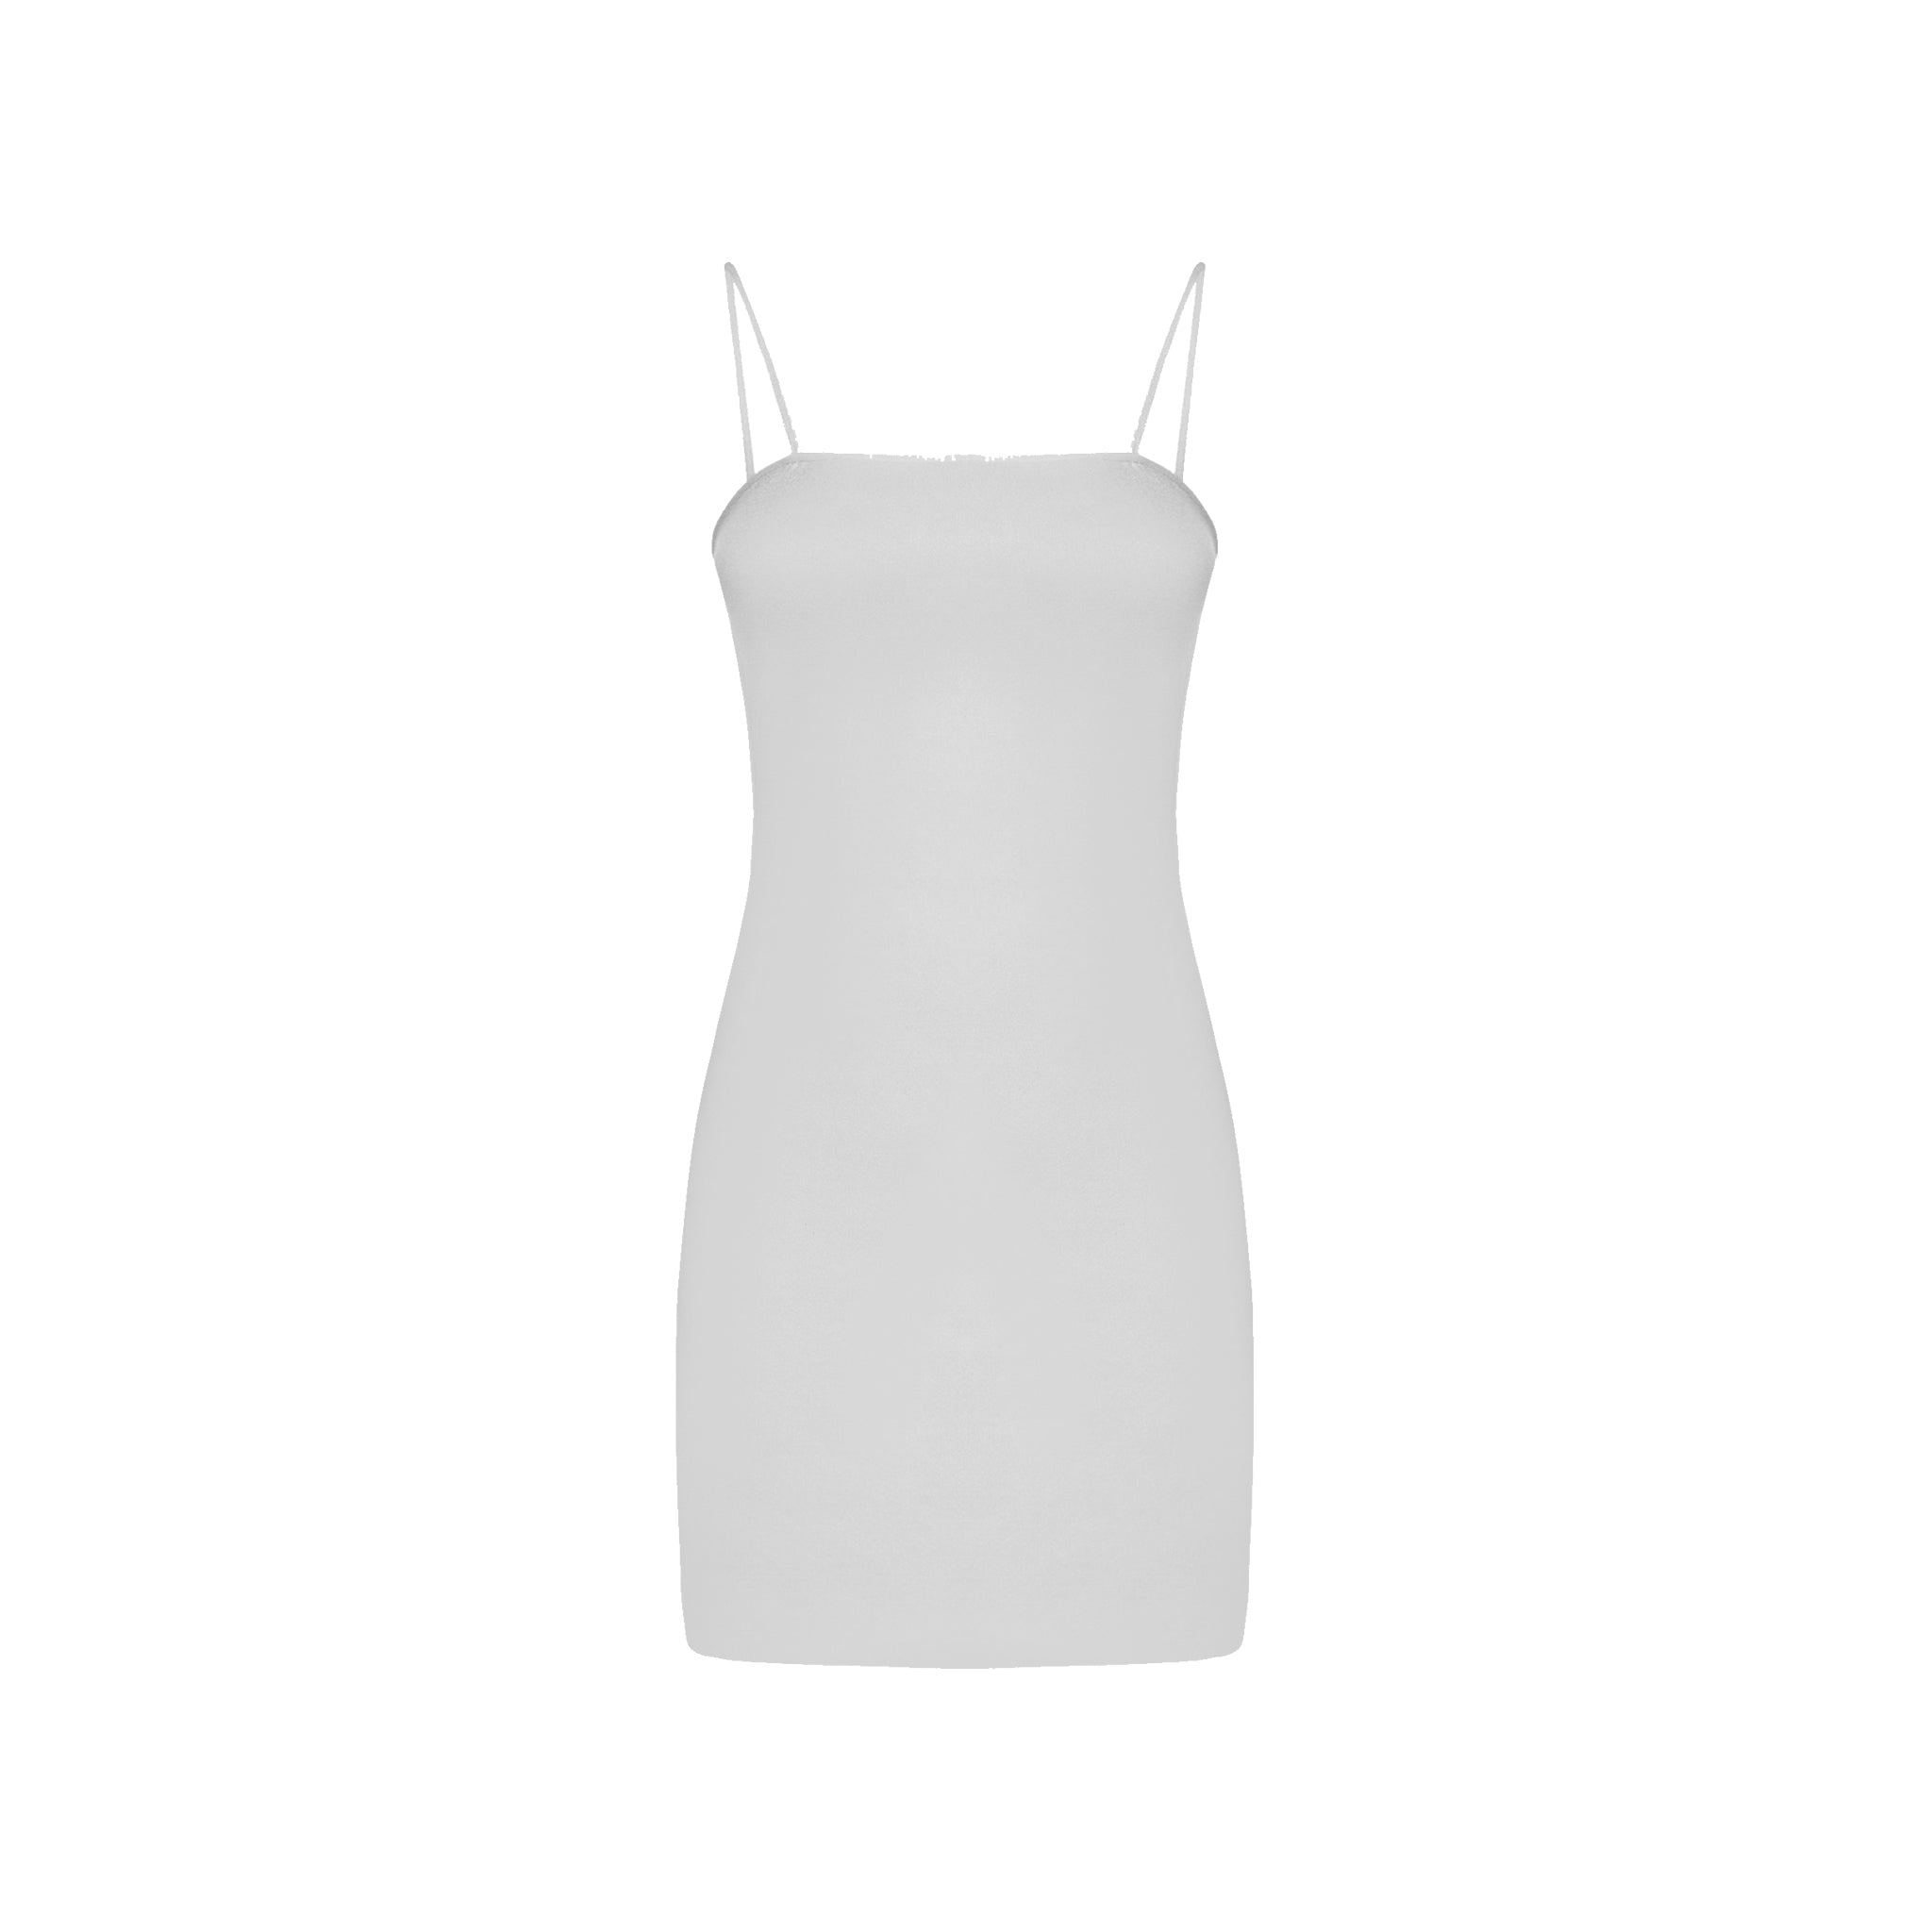 FENDI-OUTLET-SALE-Fendi-Logo-Mini-Dress-Kleider-Rocke-WHITE-44-ARCHIVE-COLLECTION.jpg